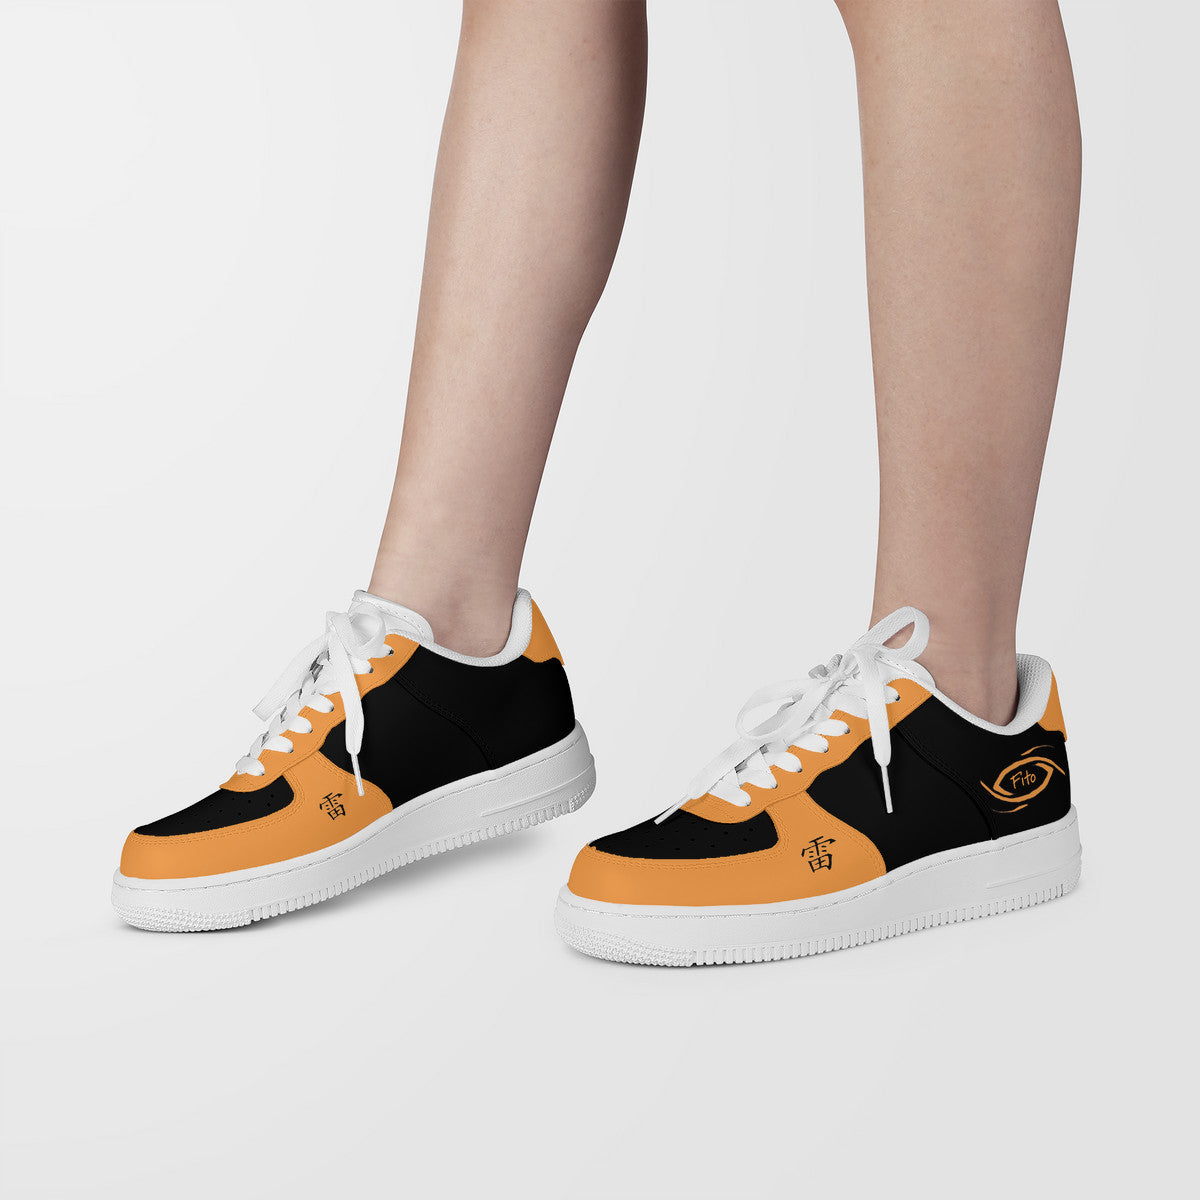 Cool shoes by Shane C | Low Top Customized | Shoe Zero